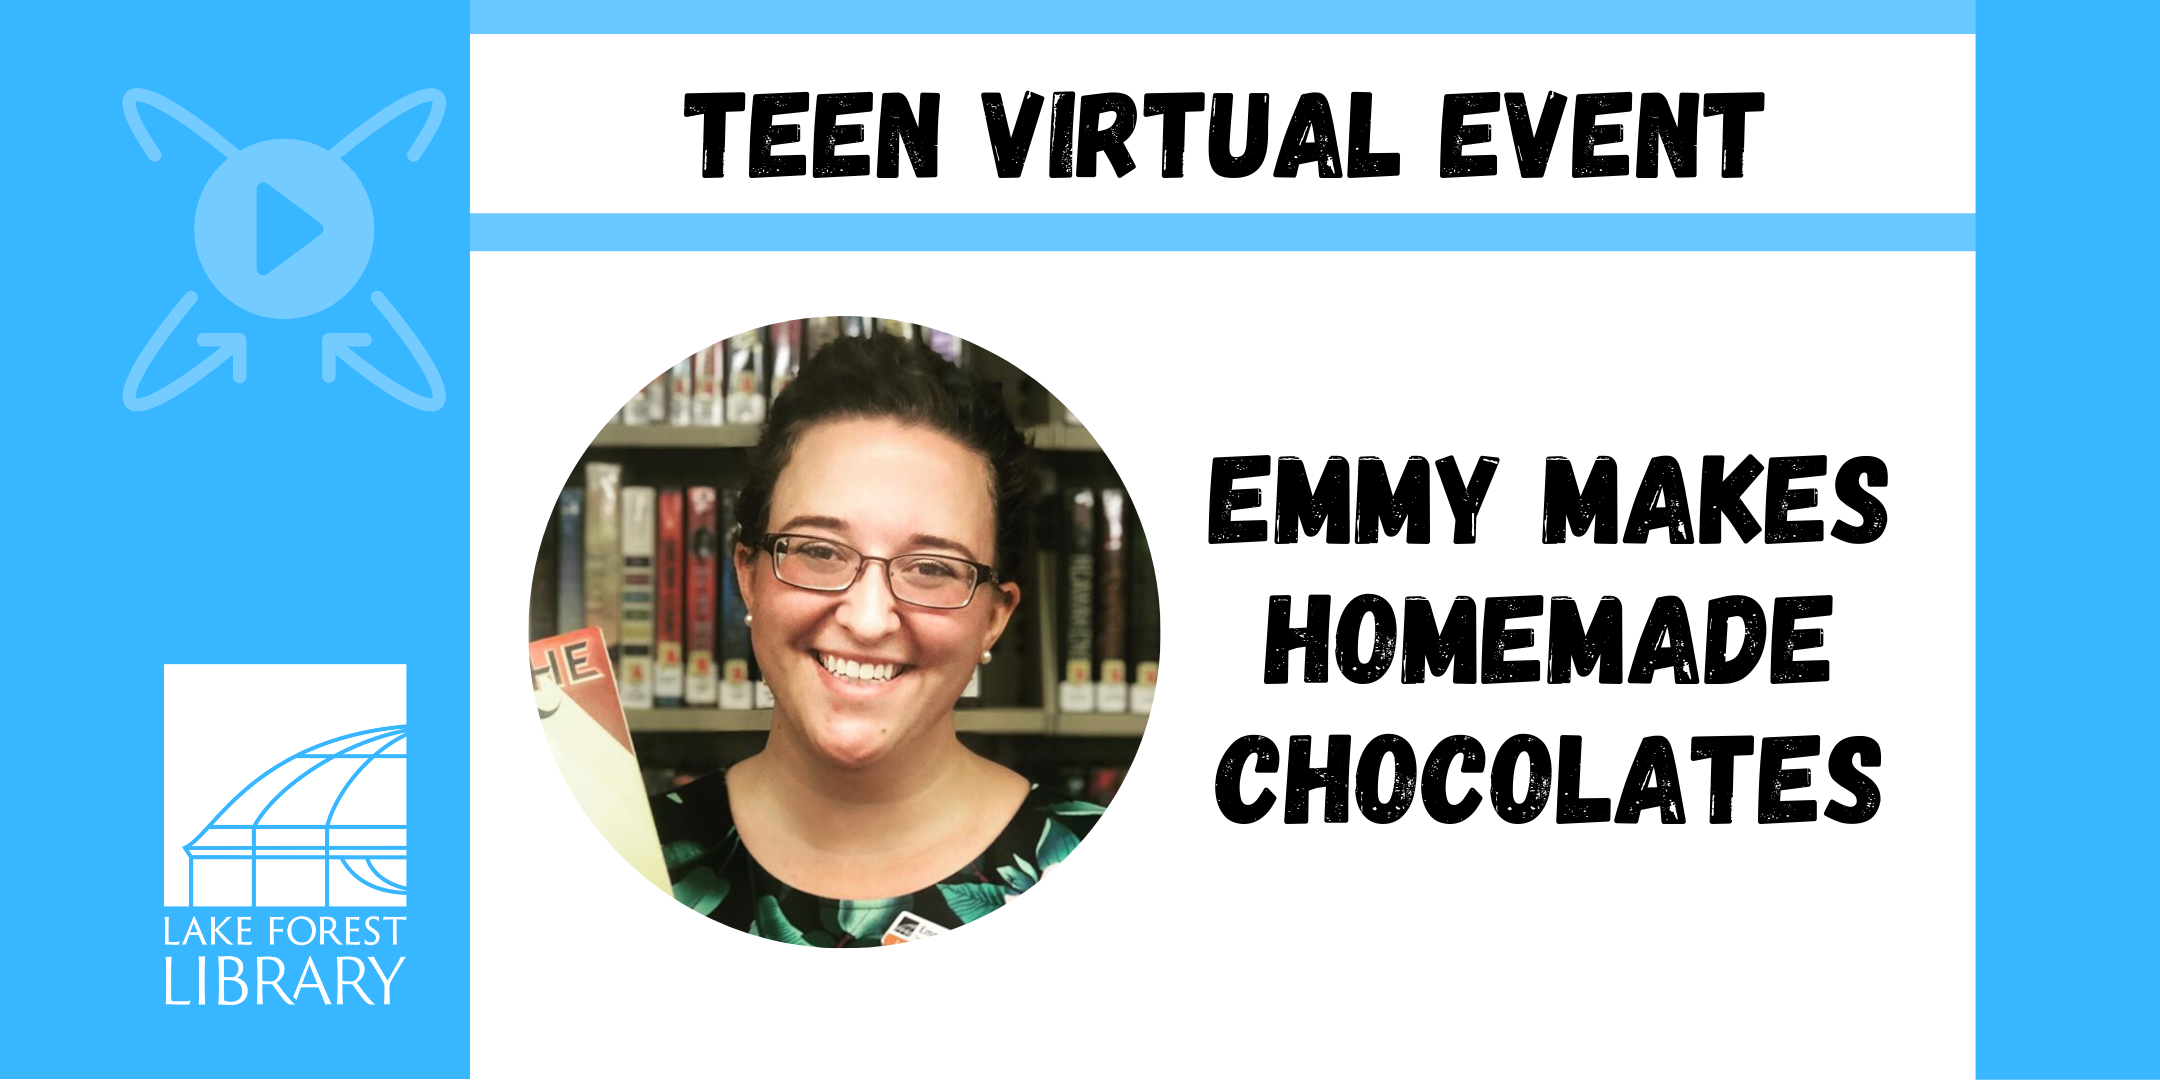 Emmy Makes Homemade Chocolates